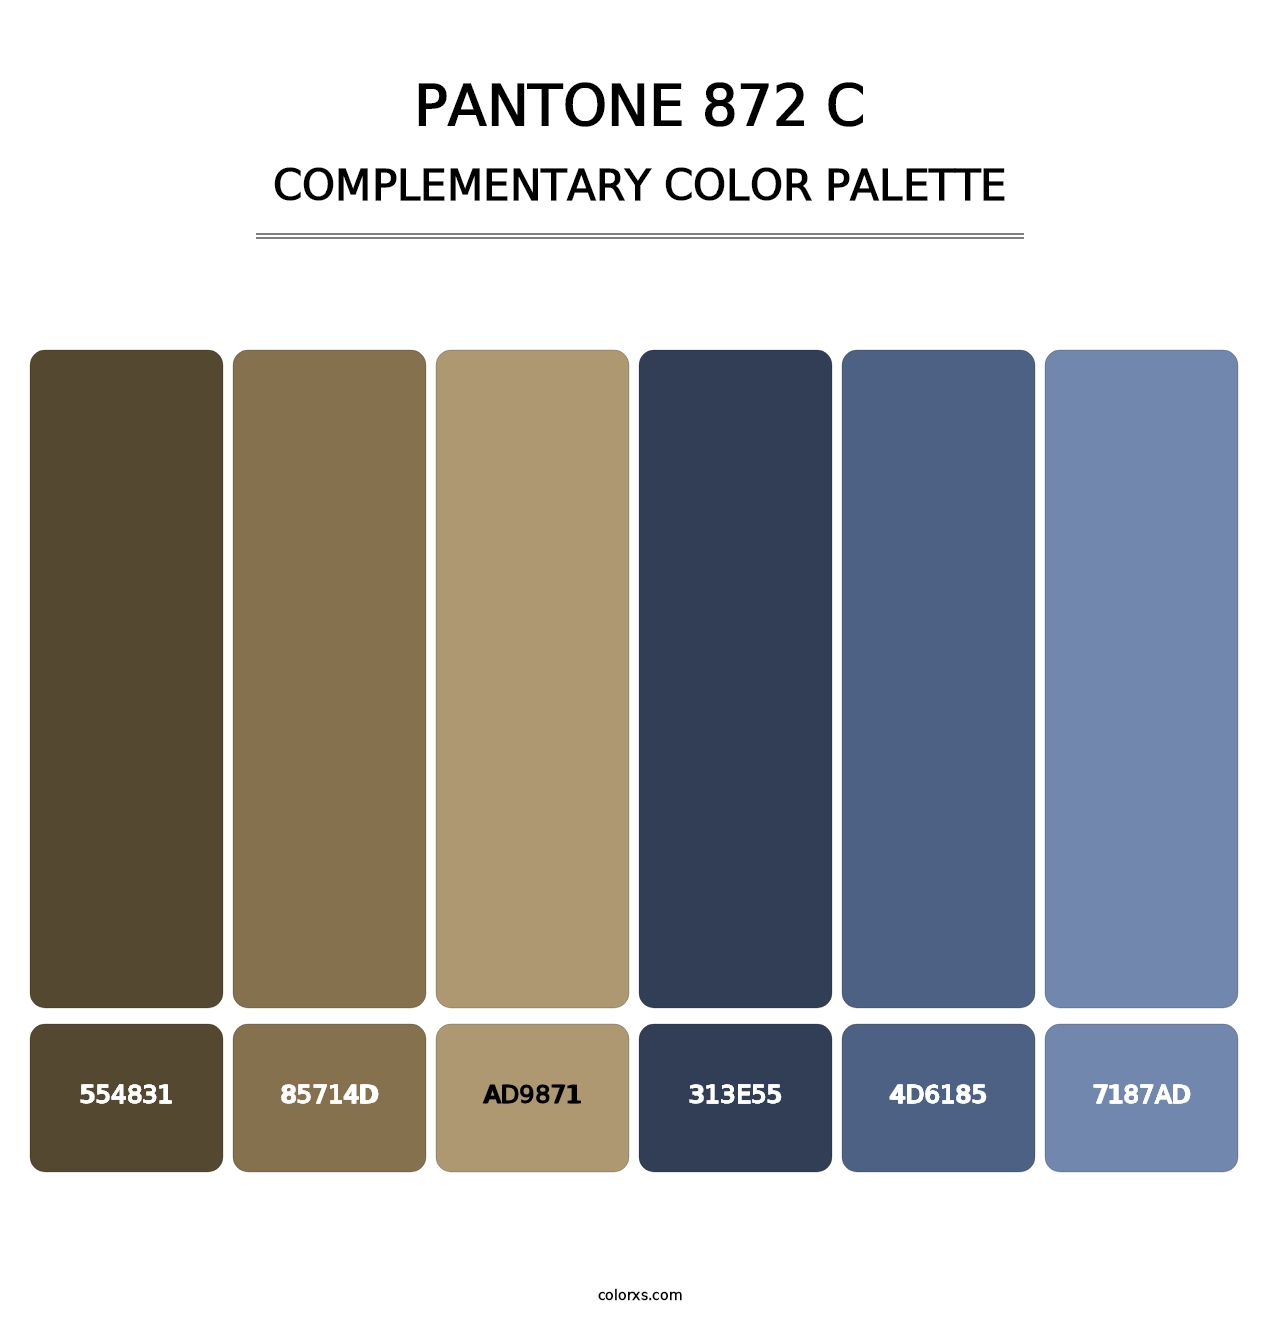 PANTONE 872 C - Complementary Color Palette